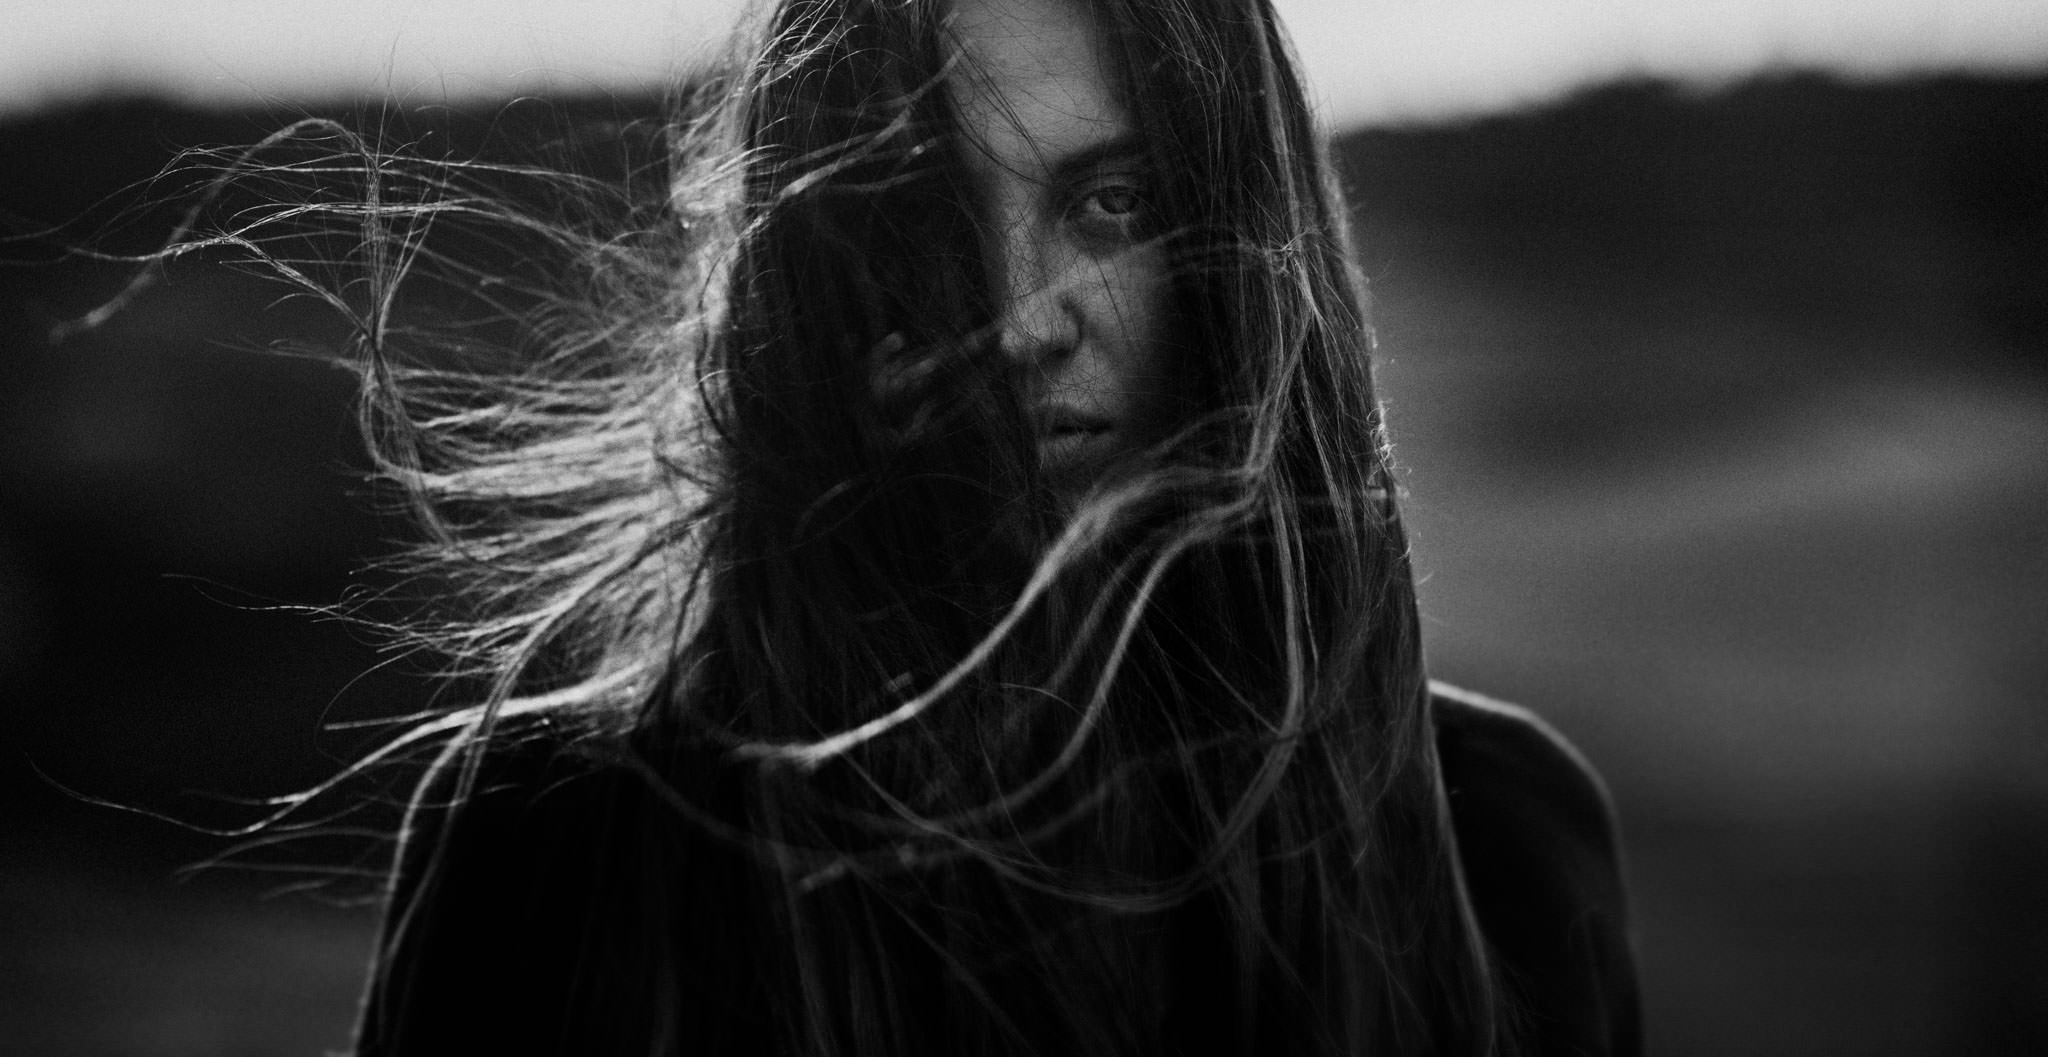 emotional portrait photography feeling wind freedom